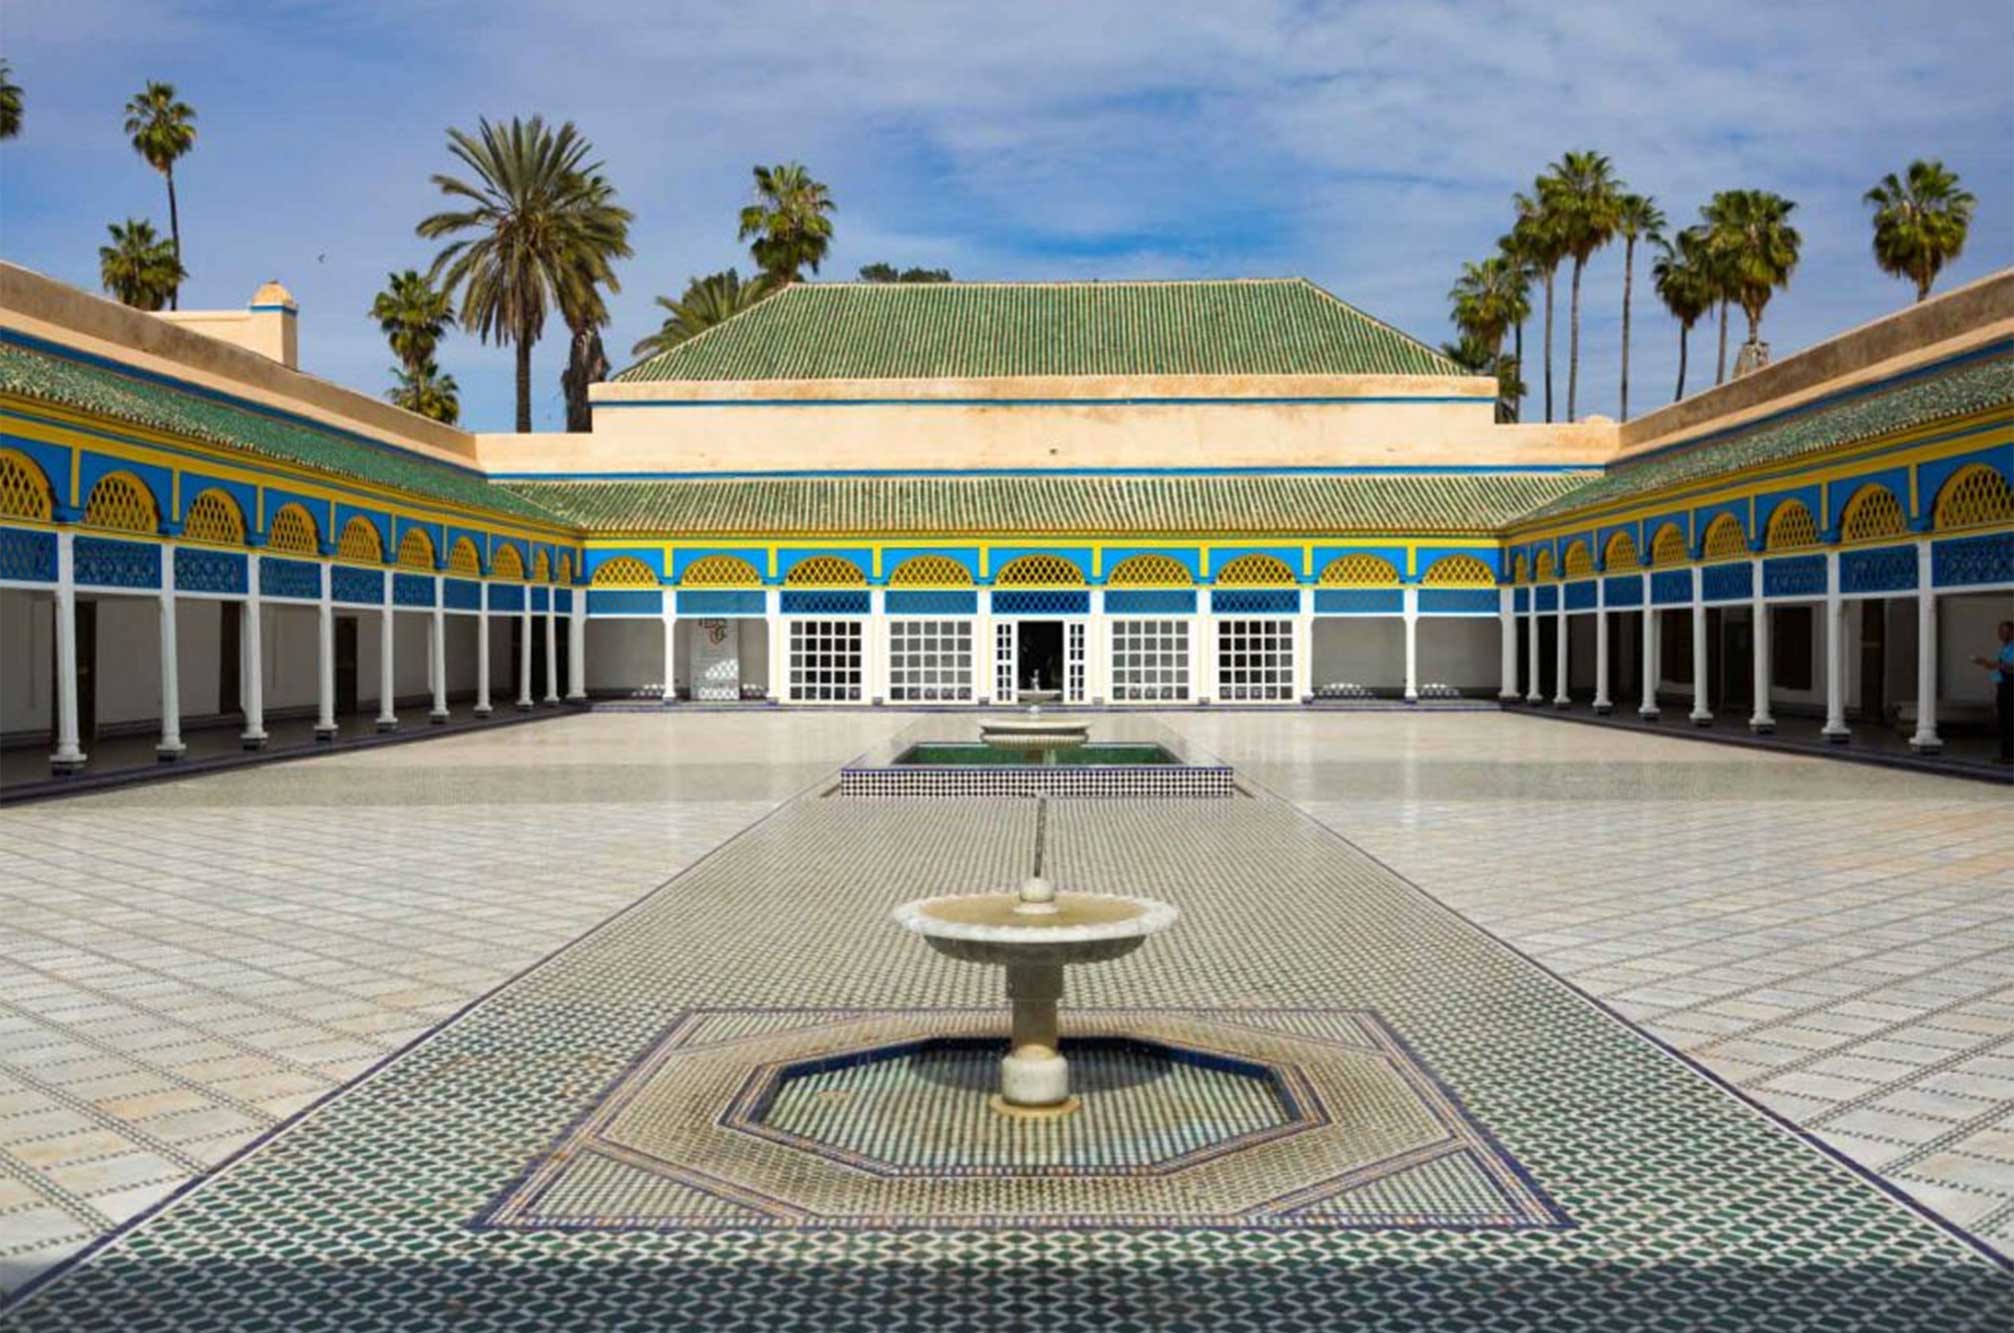 Bahia palace in Marrakech